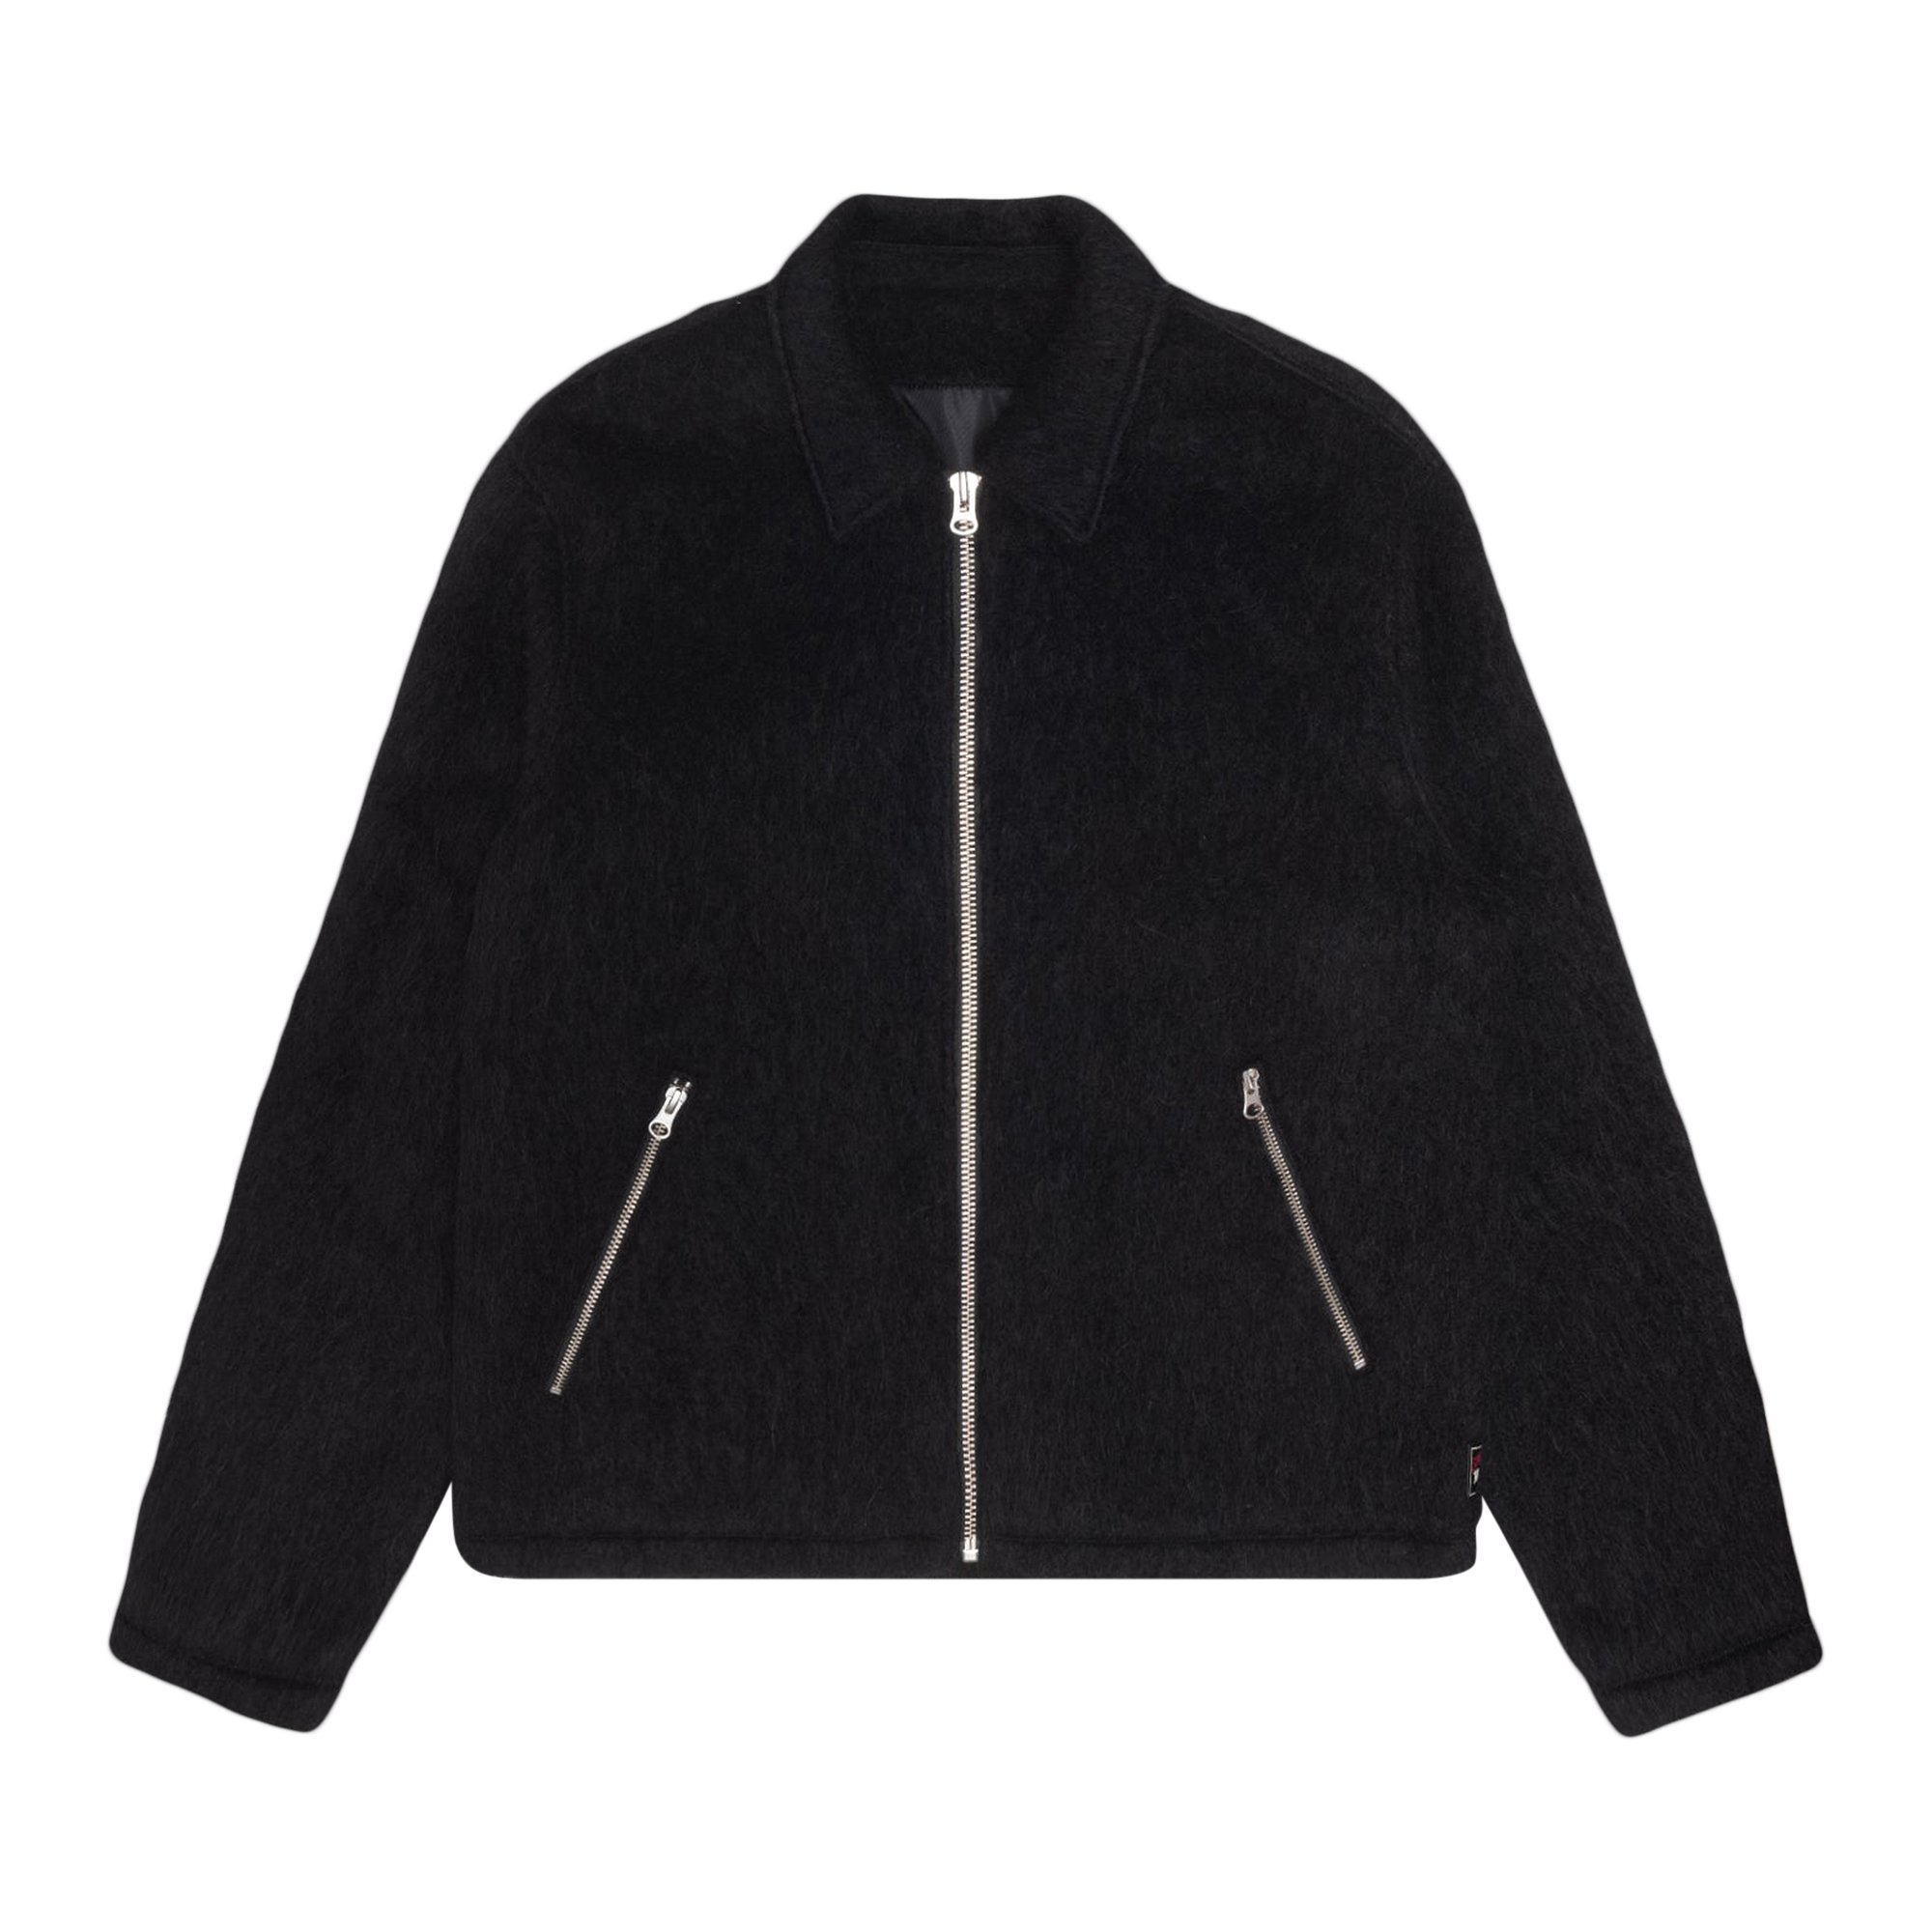 Buy Stussy Mohair Club Jacket 'Black' - 115731 BLAC | GOAT UK